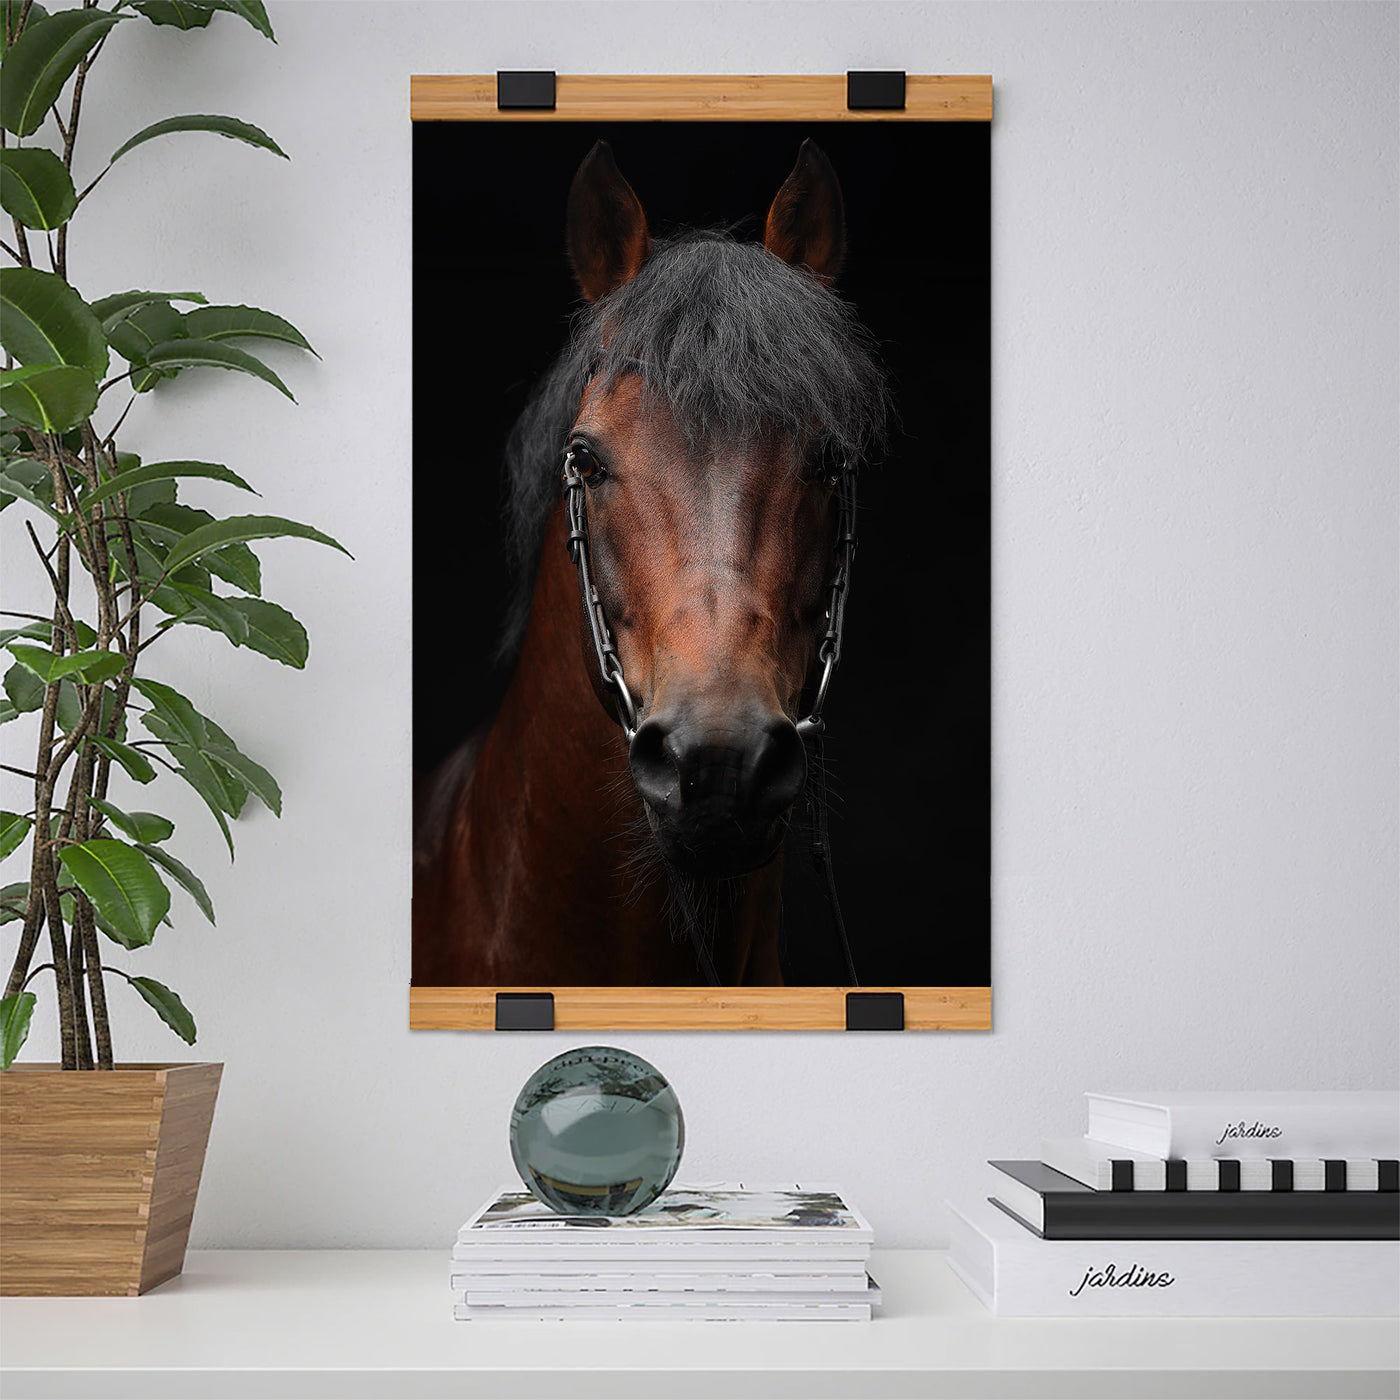 Portrait of a horse #07